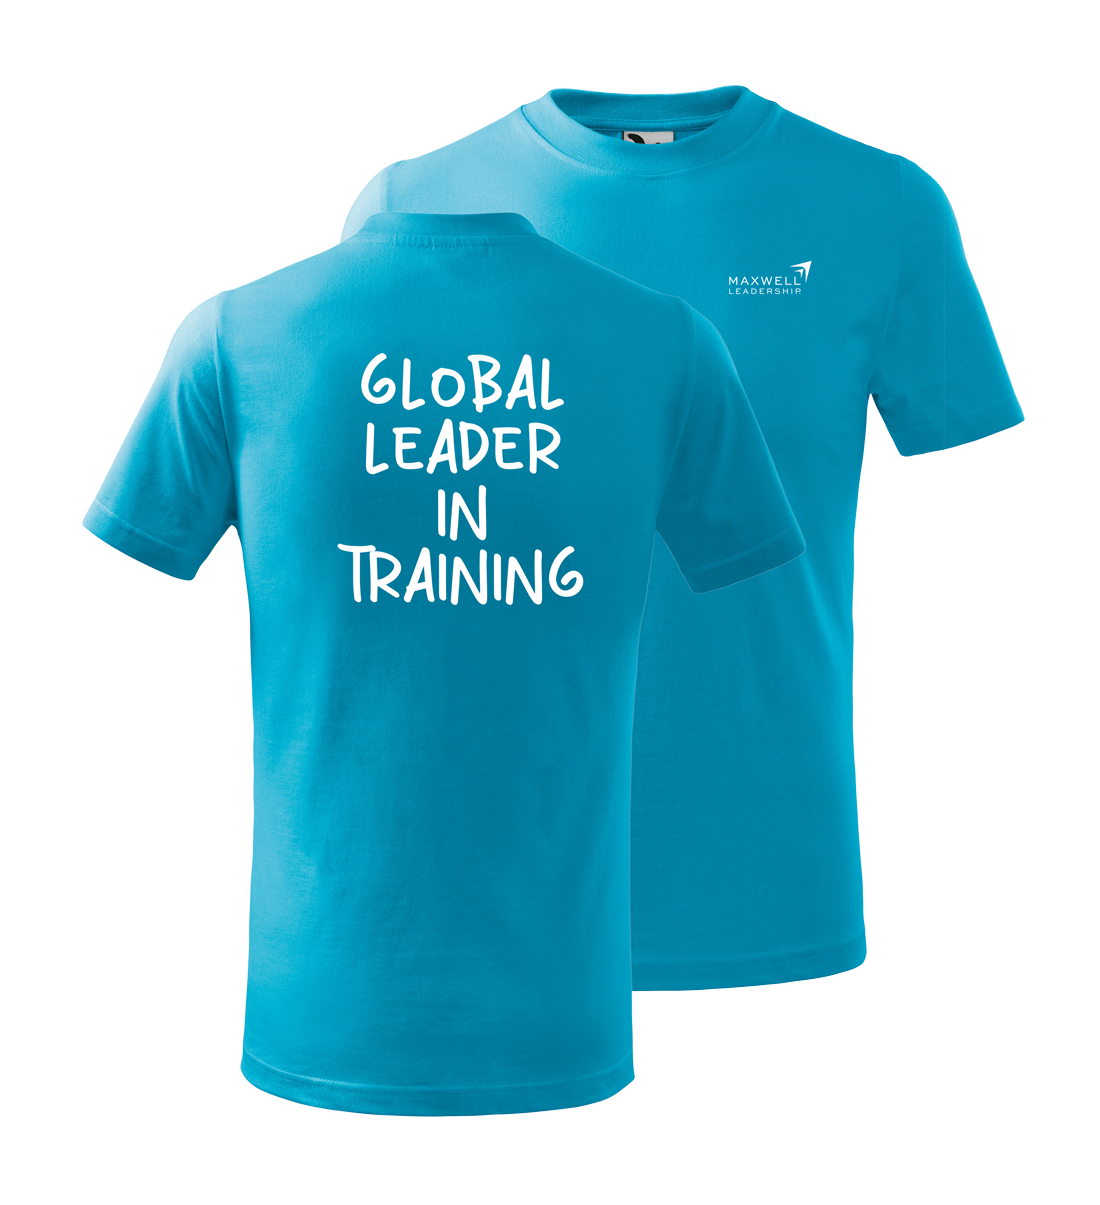 Tricou personalizat copii Maxwell Leadership